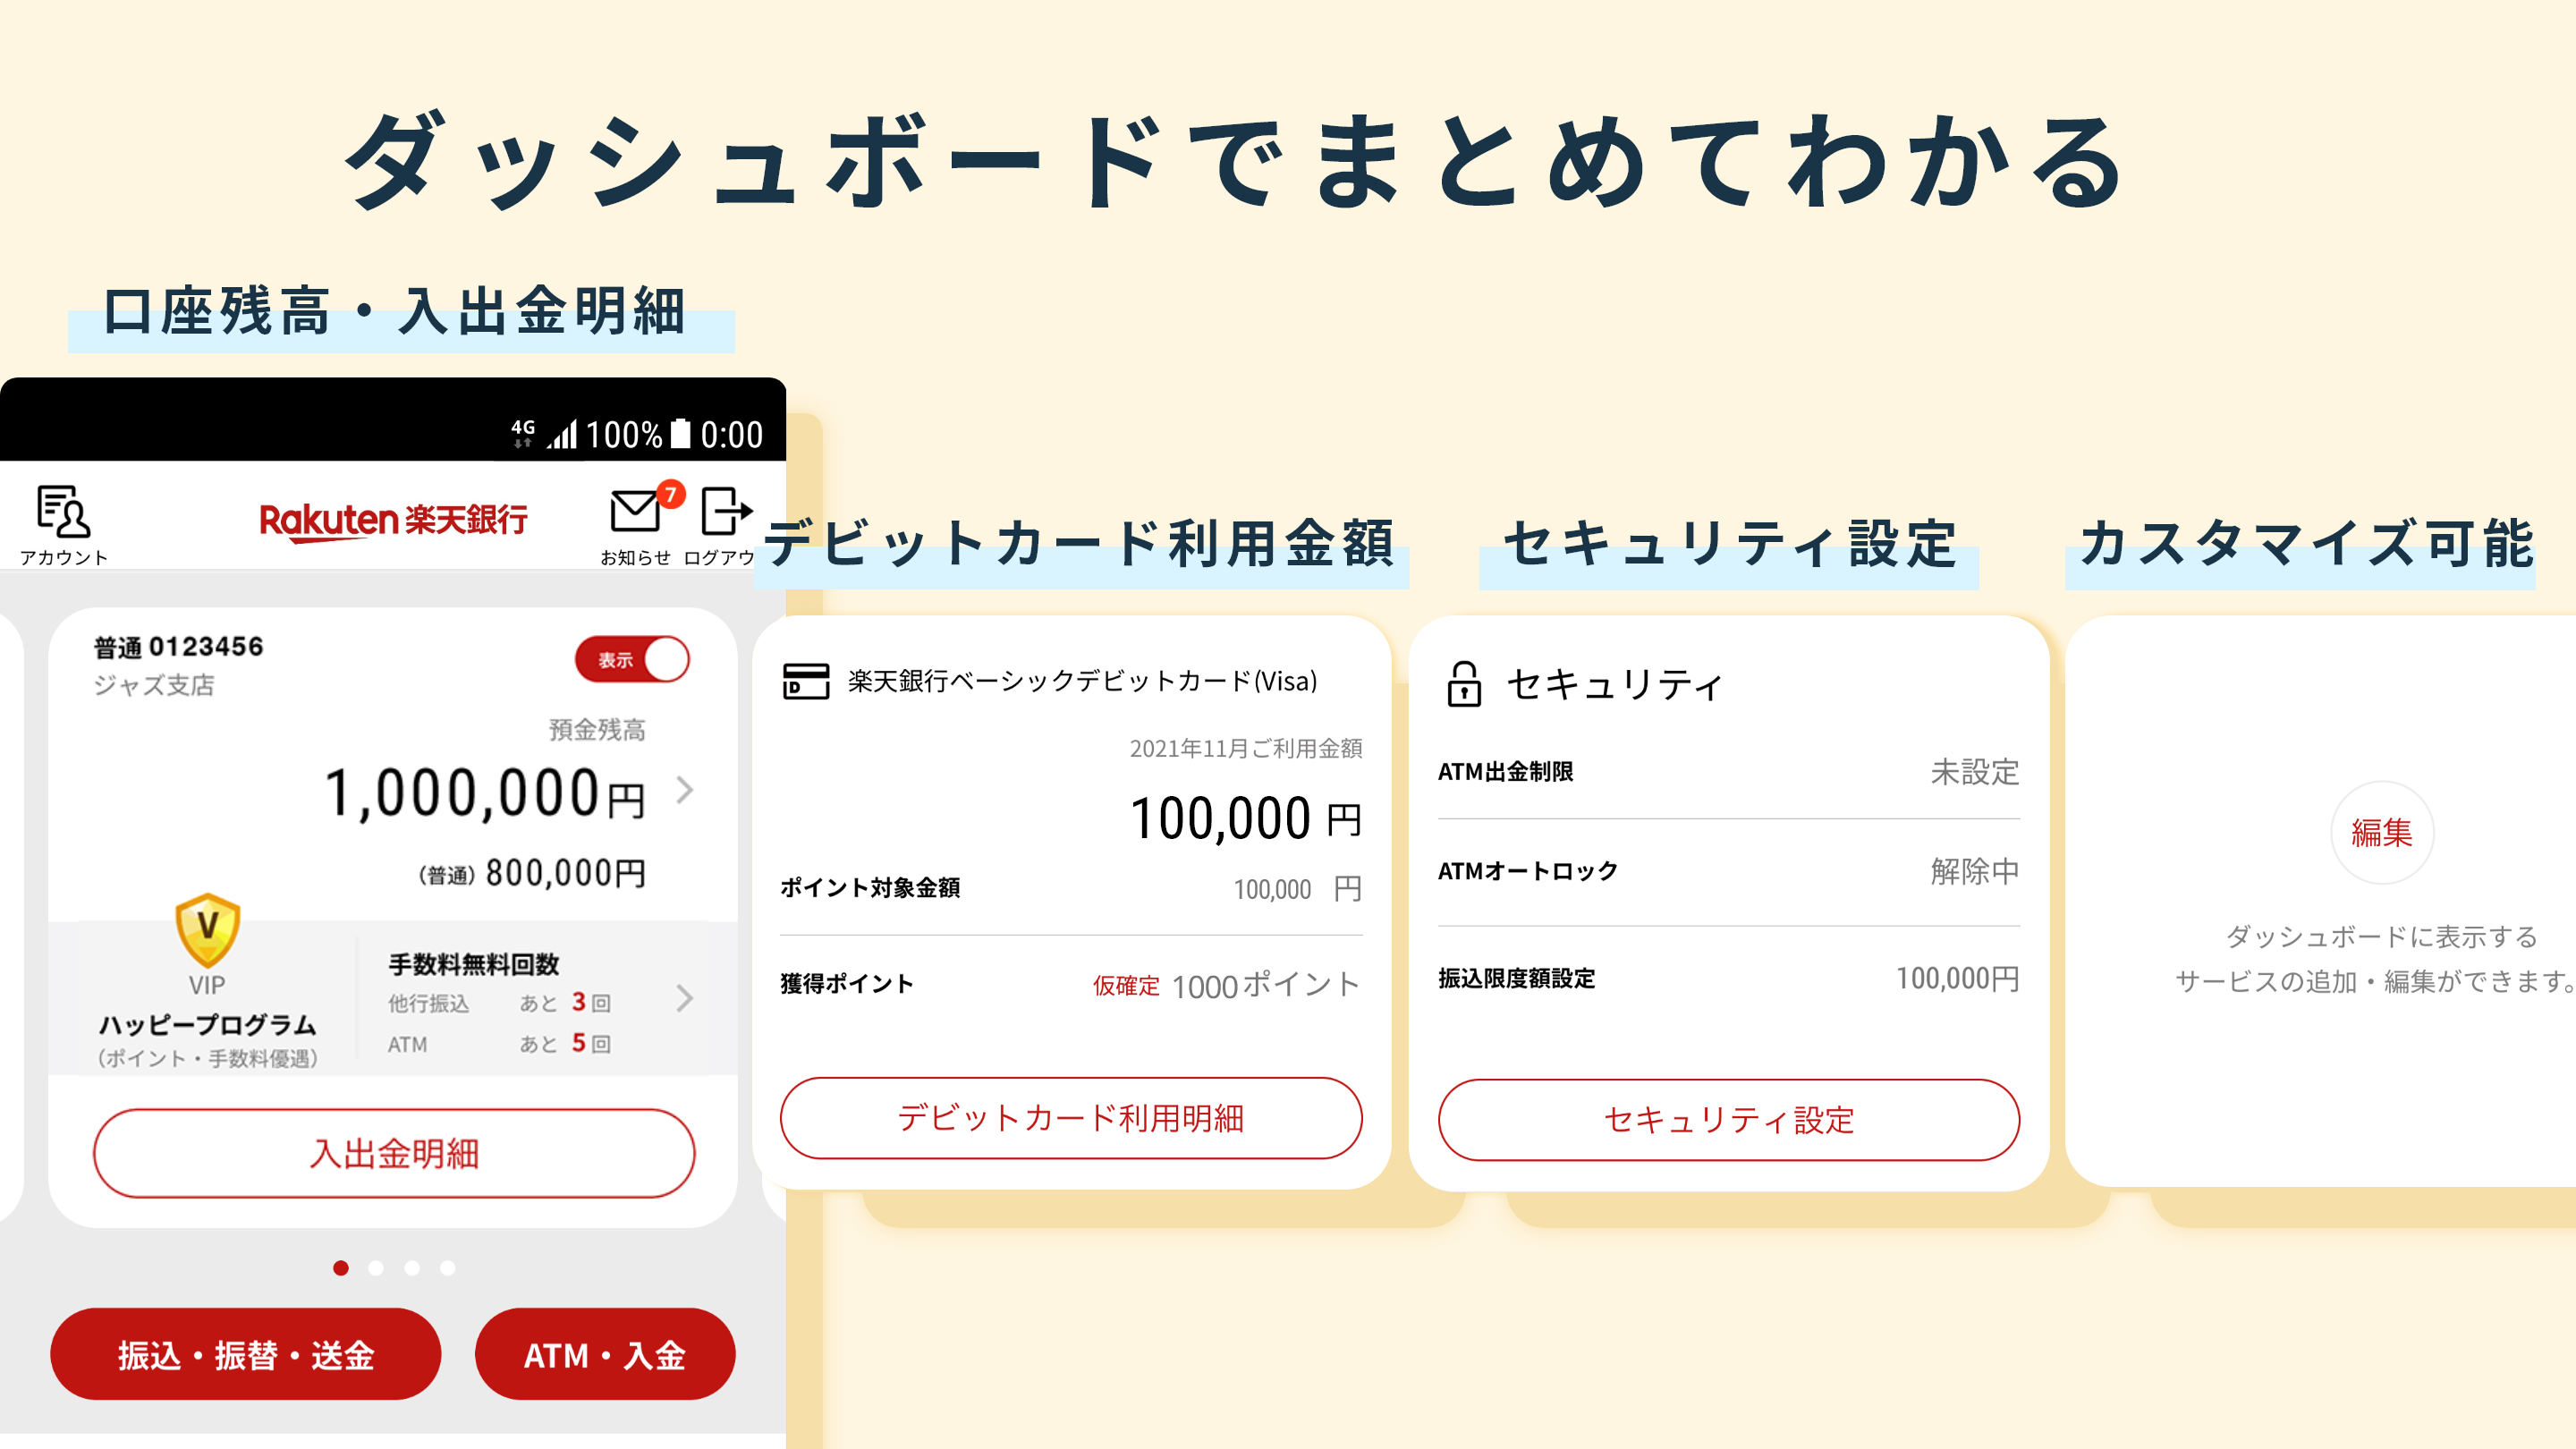 Android application 楽天銀行 -個人のお客様向けアプリ screenshort